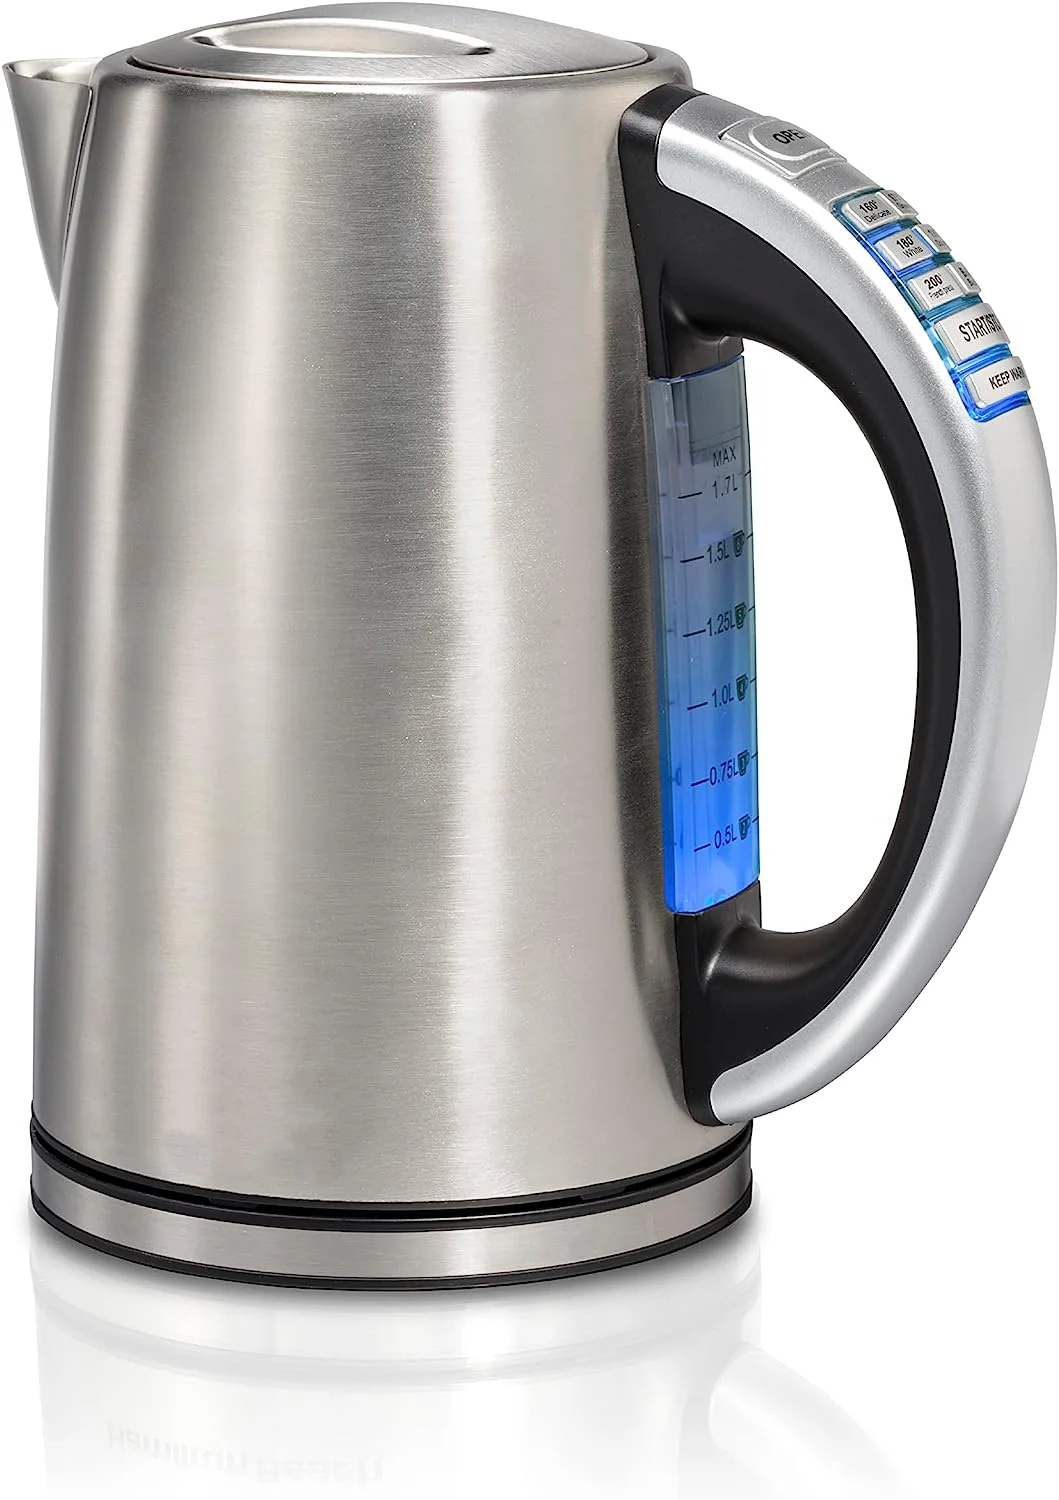 

Temperature Control Tea Kettle, Water Boiler & Heater, 1.7 Liter, Fast 1500 Watts, BPA Free, Cordless, Auto-Shutoff and Boi